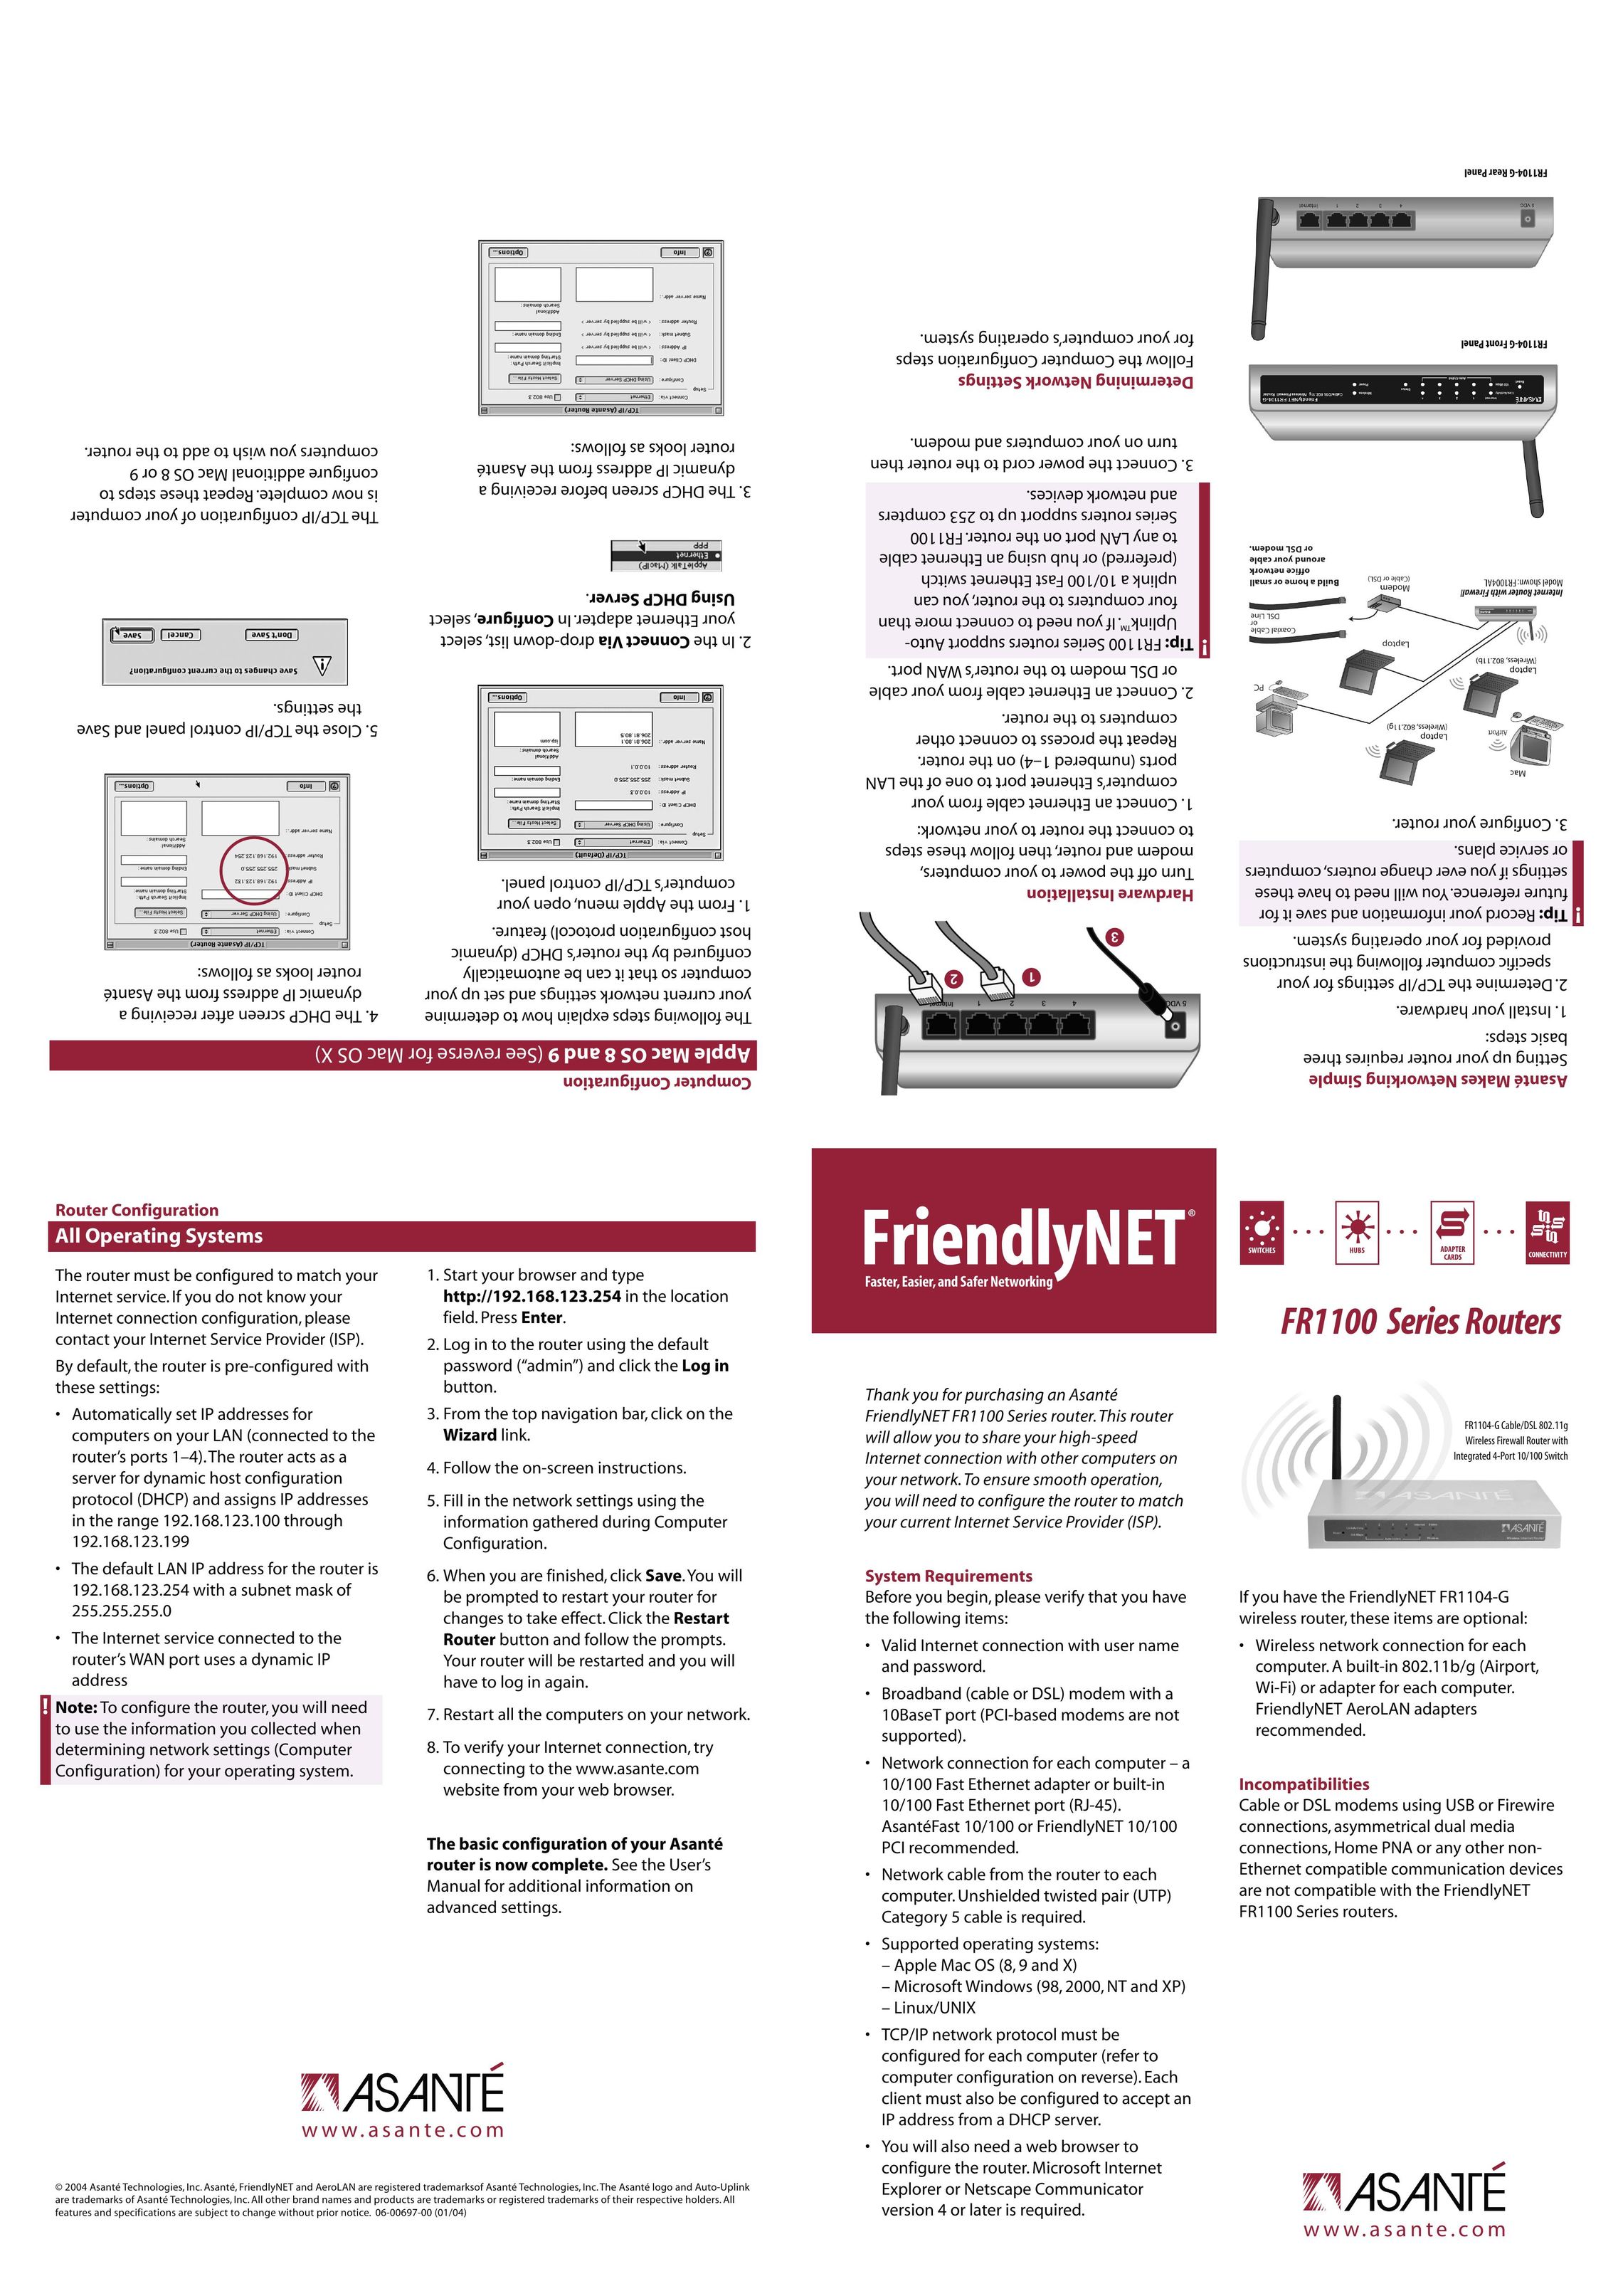 Asante Technologies FR1104-G Network Router User Manual